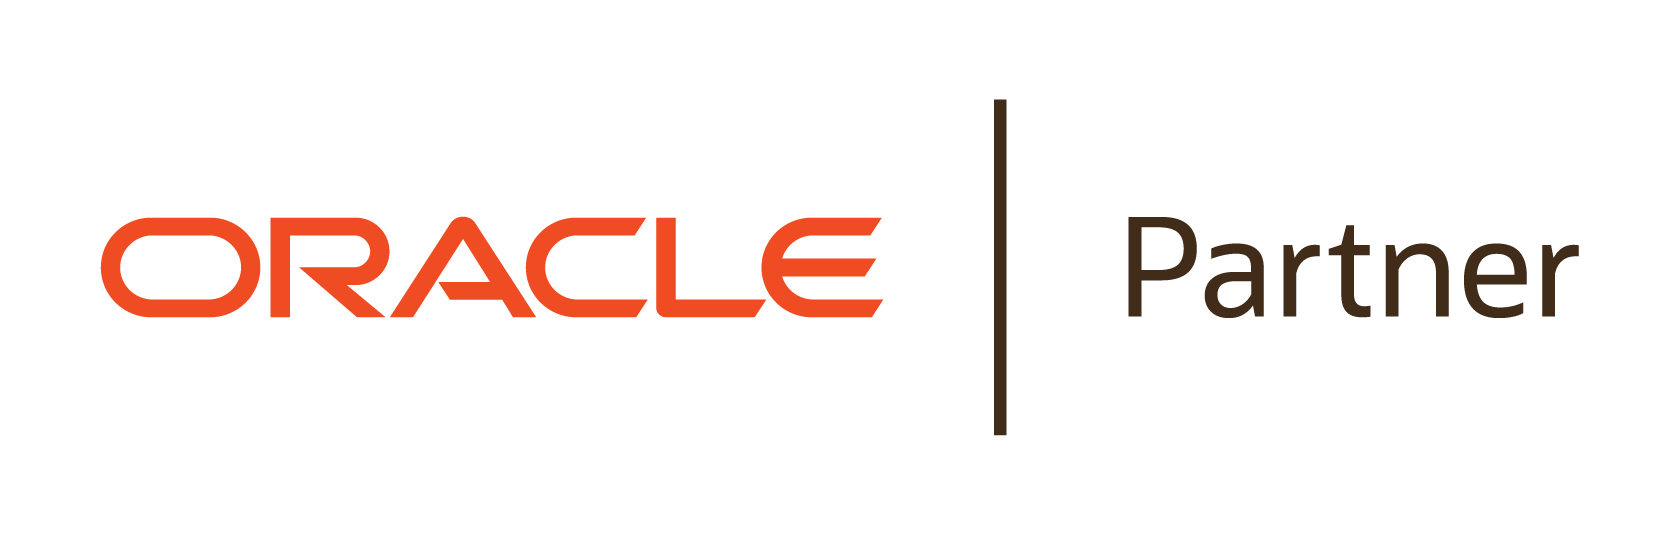 Oracle Partner logo.